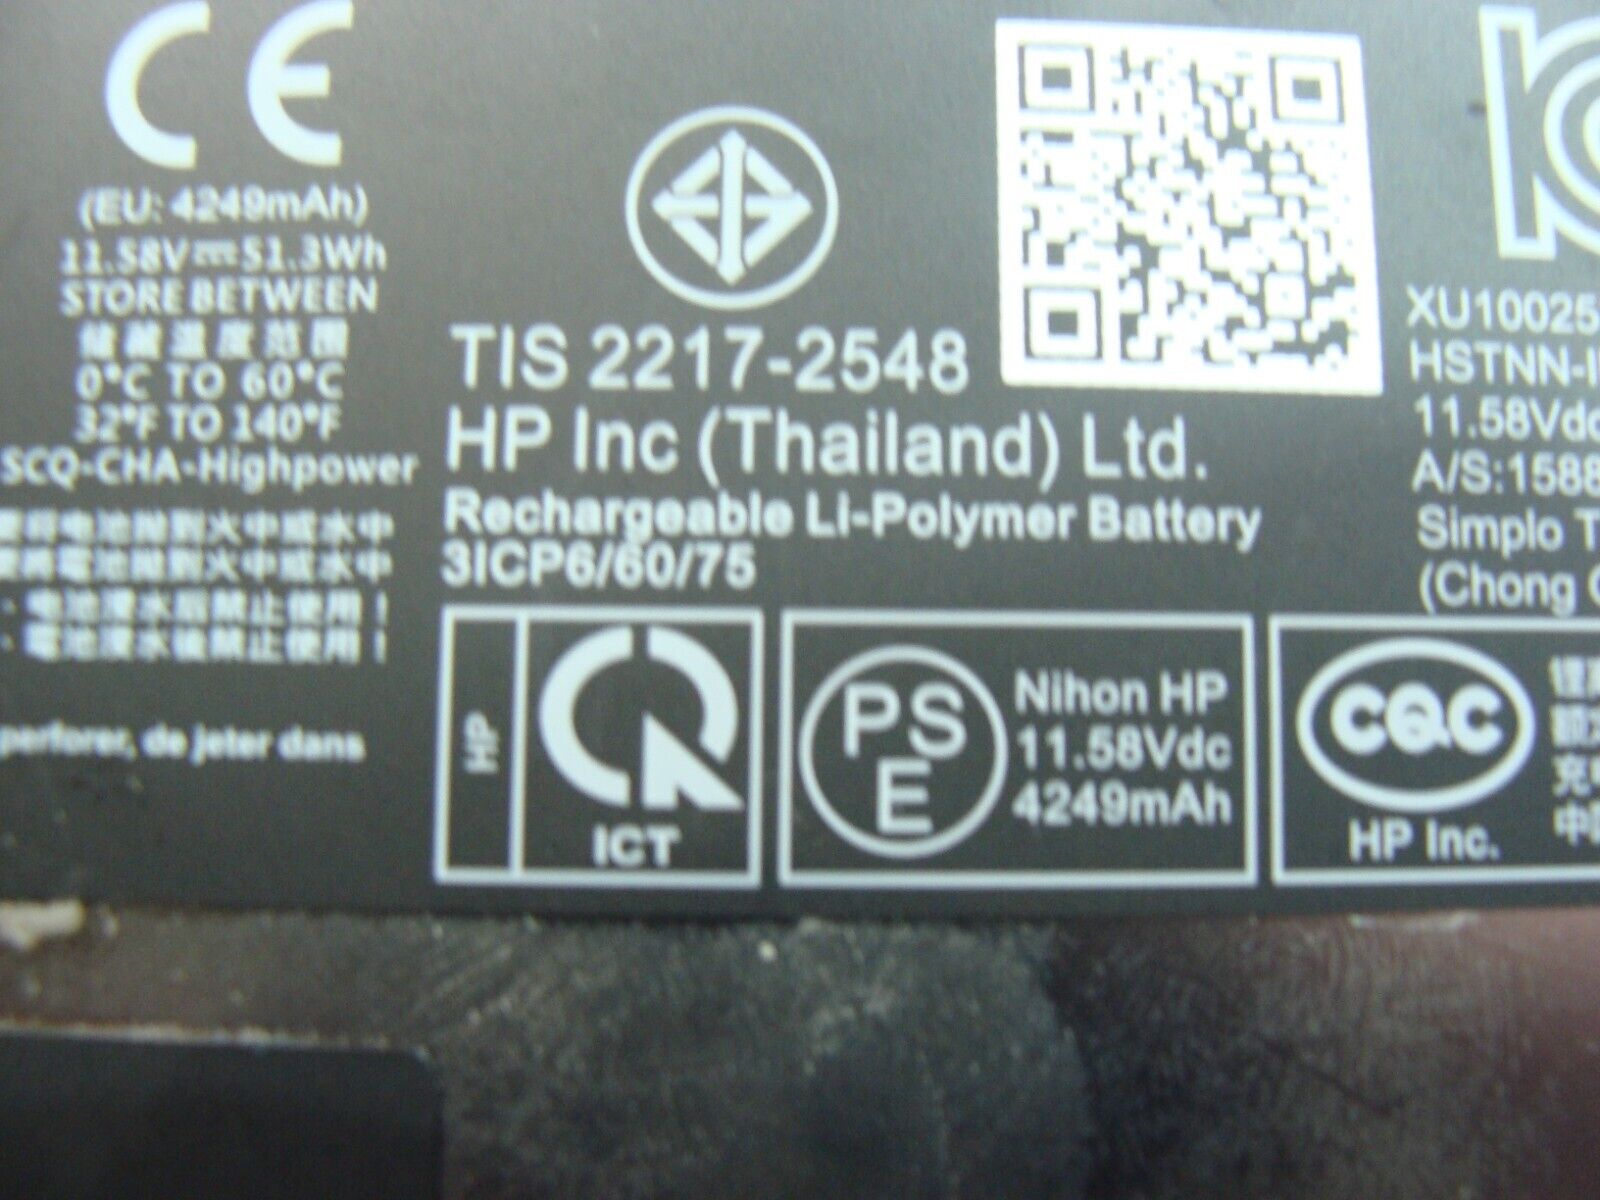 HP EliteBook 14” 845 G9 Genuine Battery 11.58V 51.3Wh 4249mAh WP03XL M73466-005